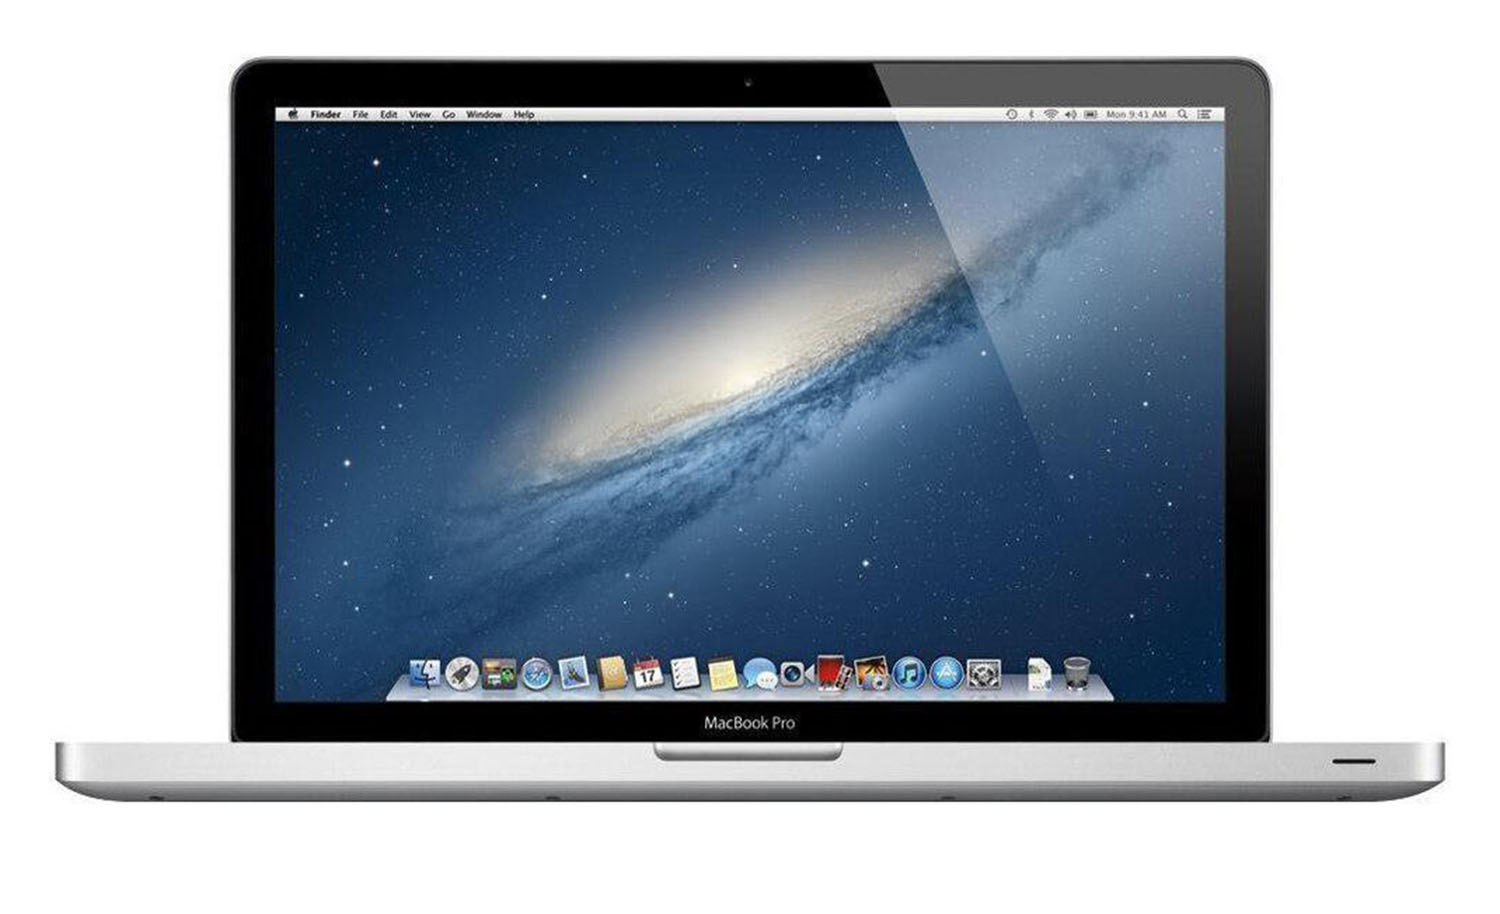 Apple Macbook Pro Intel Core i7 6th Gen 8GB RAM 500GB HDD macOS High Sierra 10.13.6 Nvidia GeForce 330M